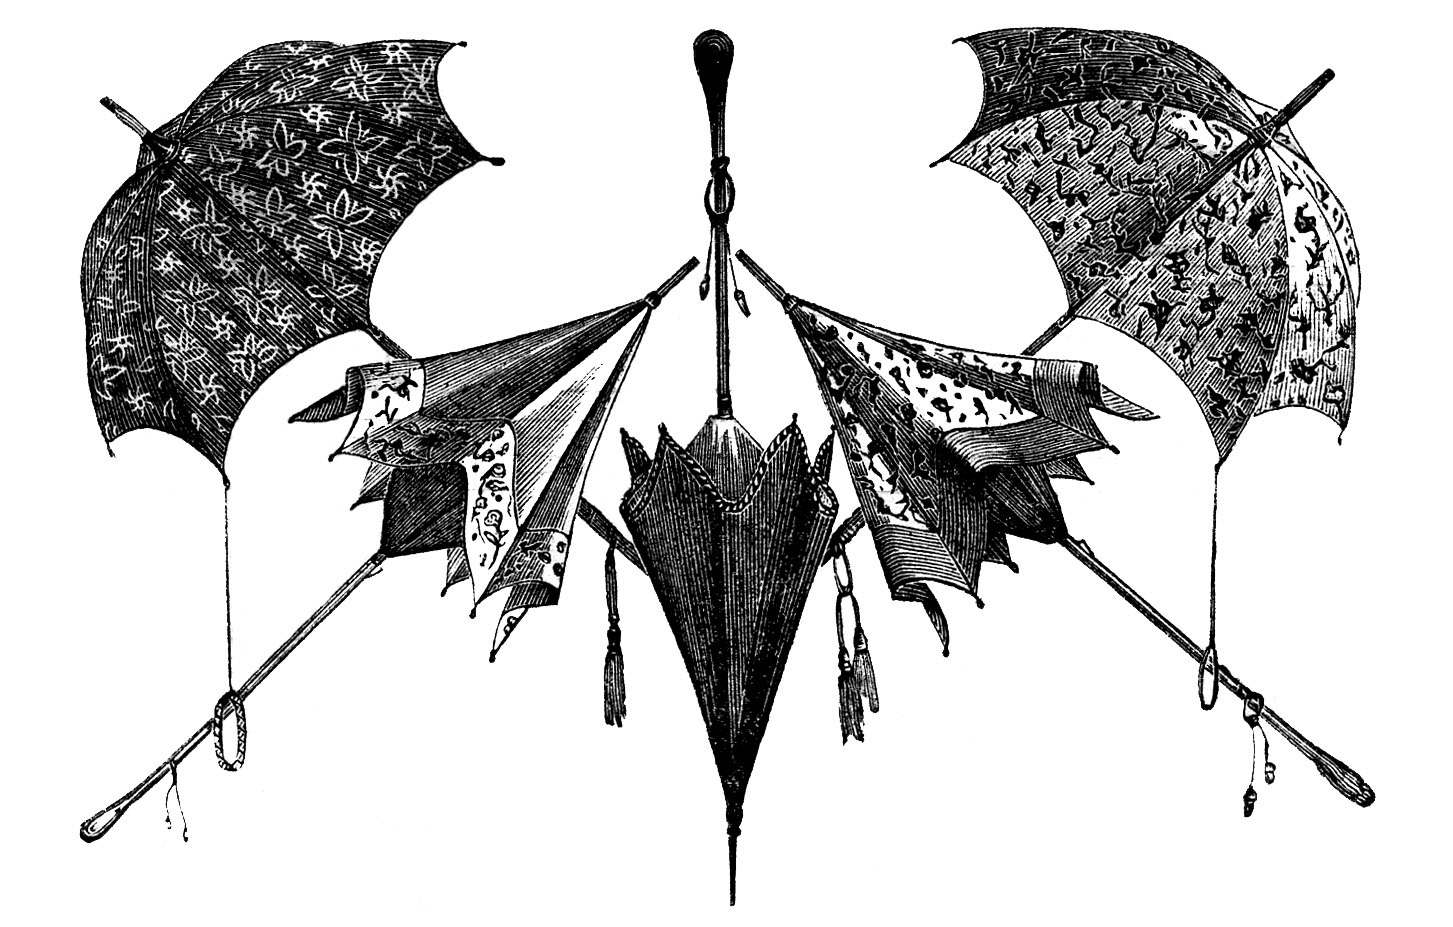 8 Vintage Umbrella Images! - The Graphics Fairy